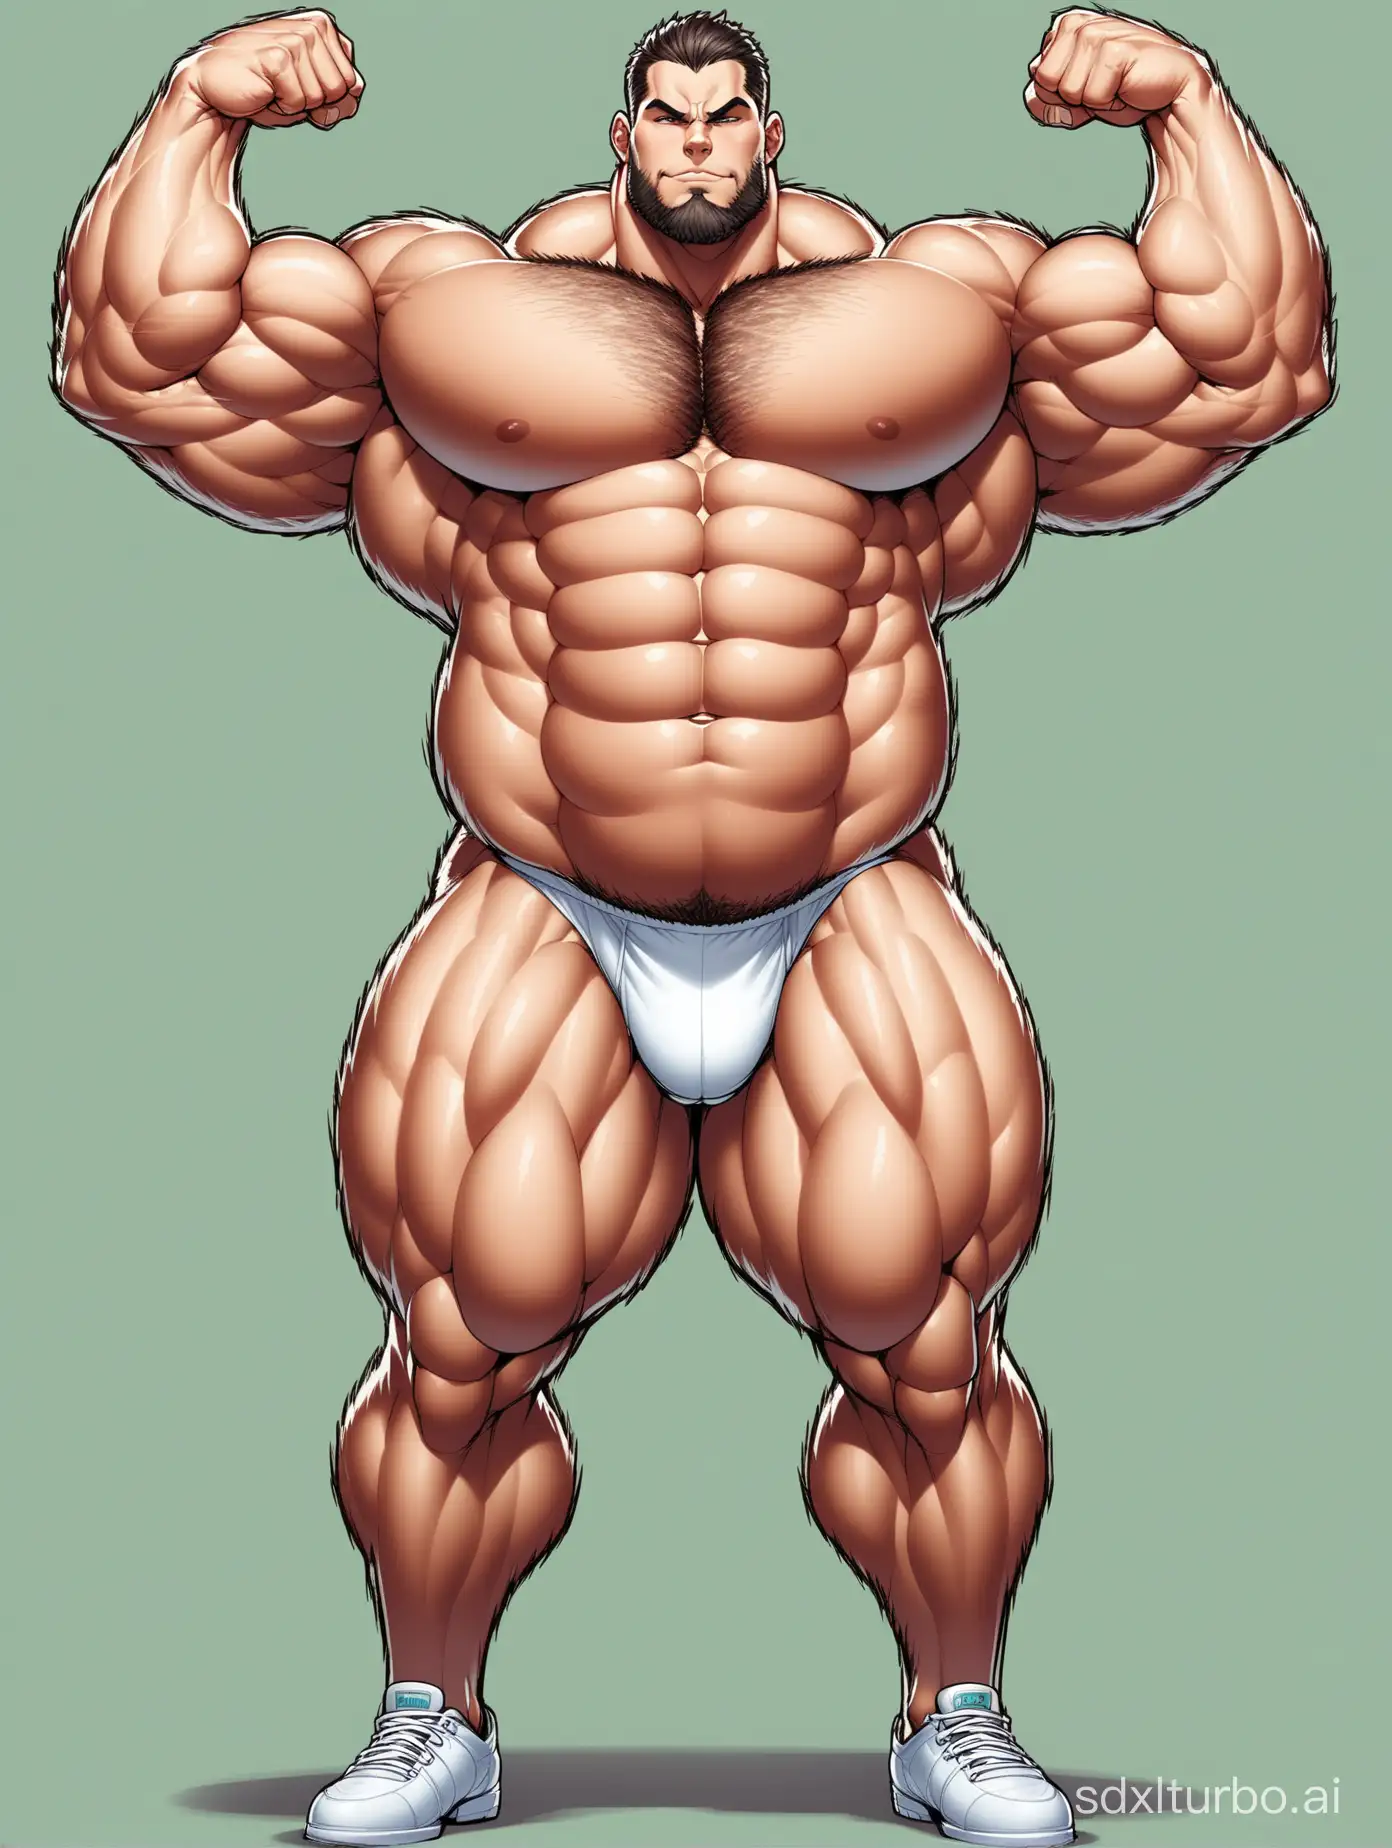 Massive-Muscle-Bodybuilder-Showing-Off-Biceps-in-White-Underwear